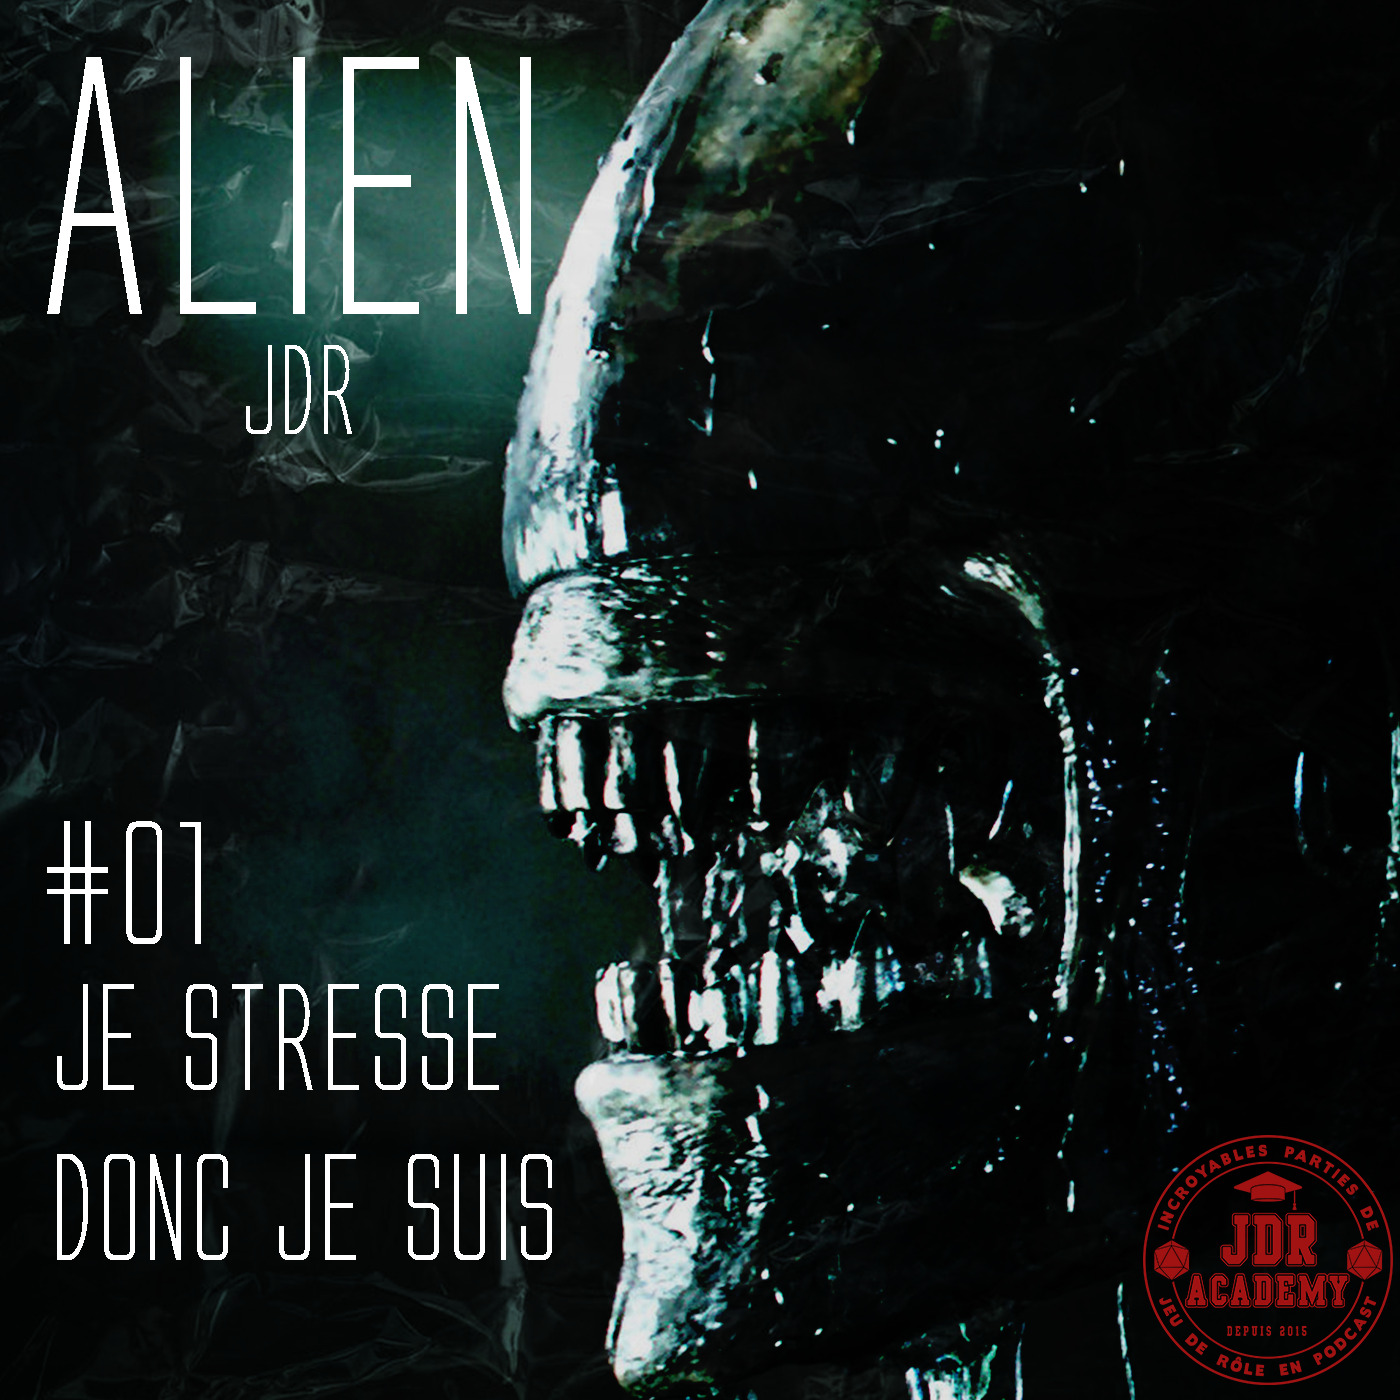 Alien #01 – Je stresse donc je suis